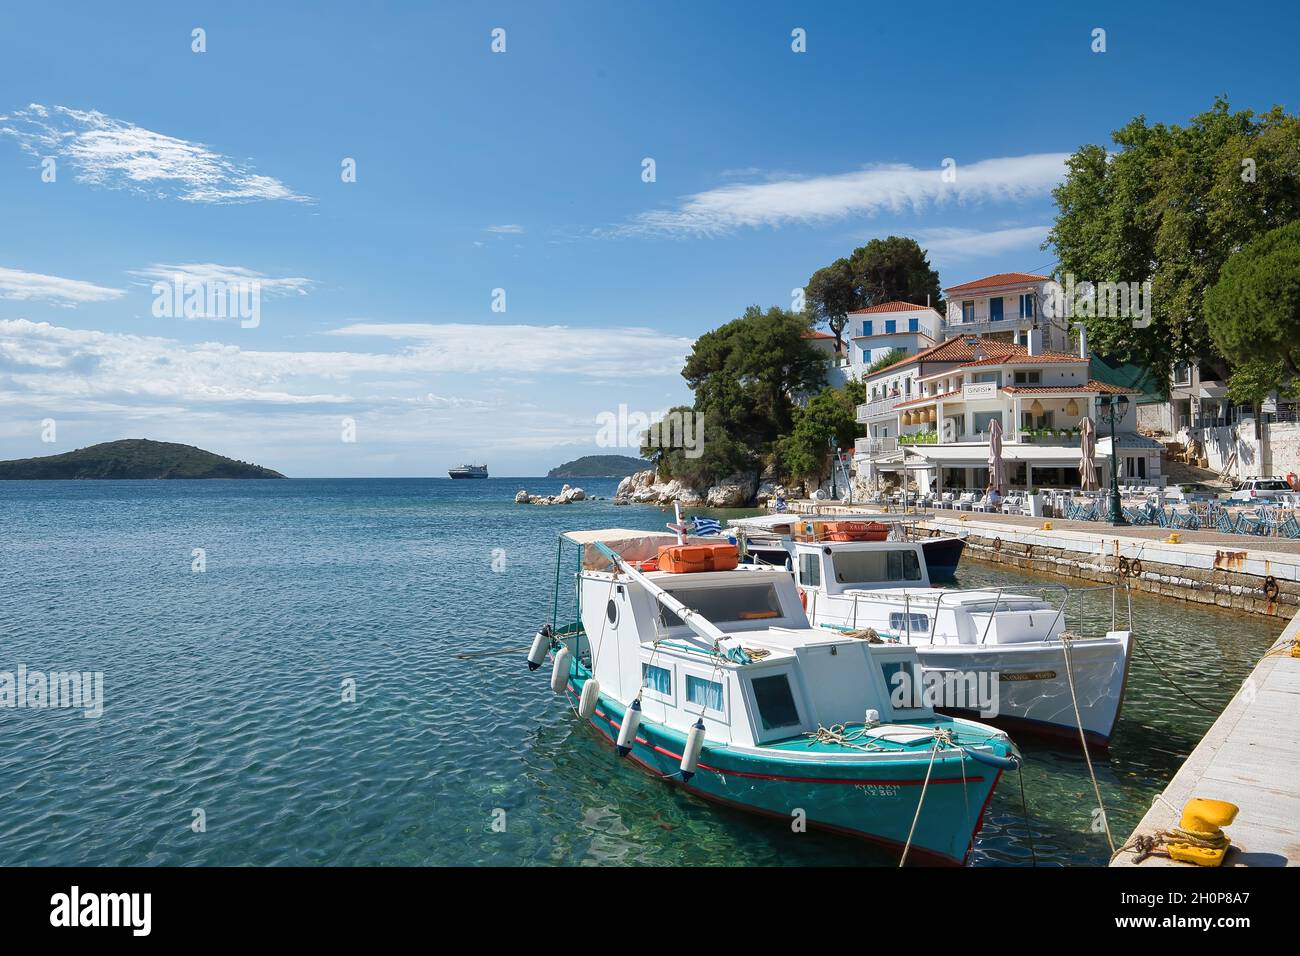 the ultimate summer tourist destination. The old port. Skiathos island, Greece Stock Photo